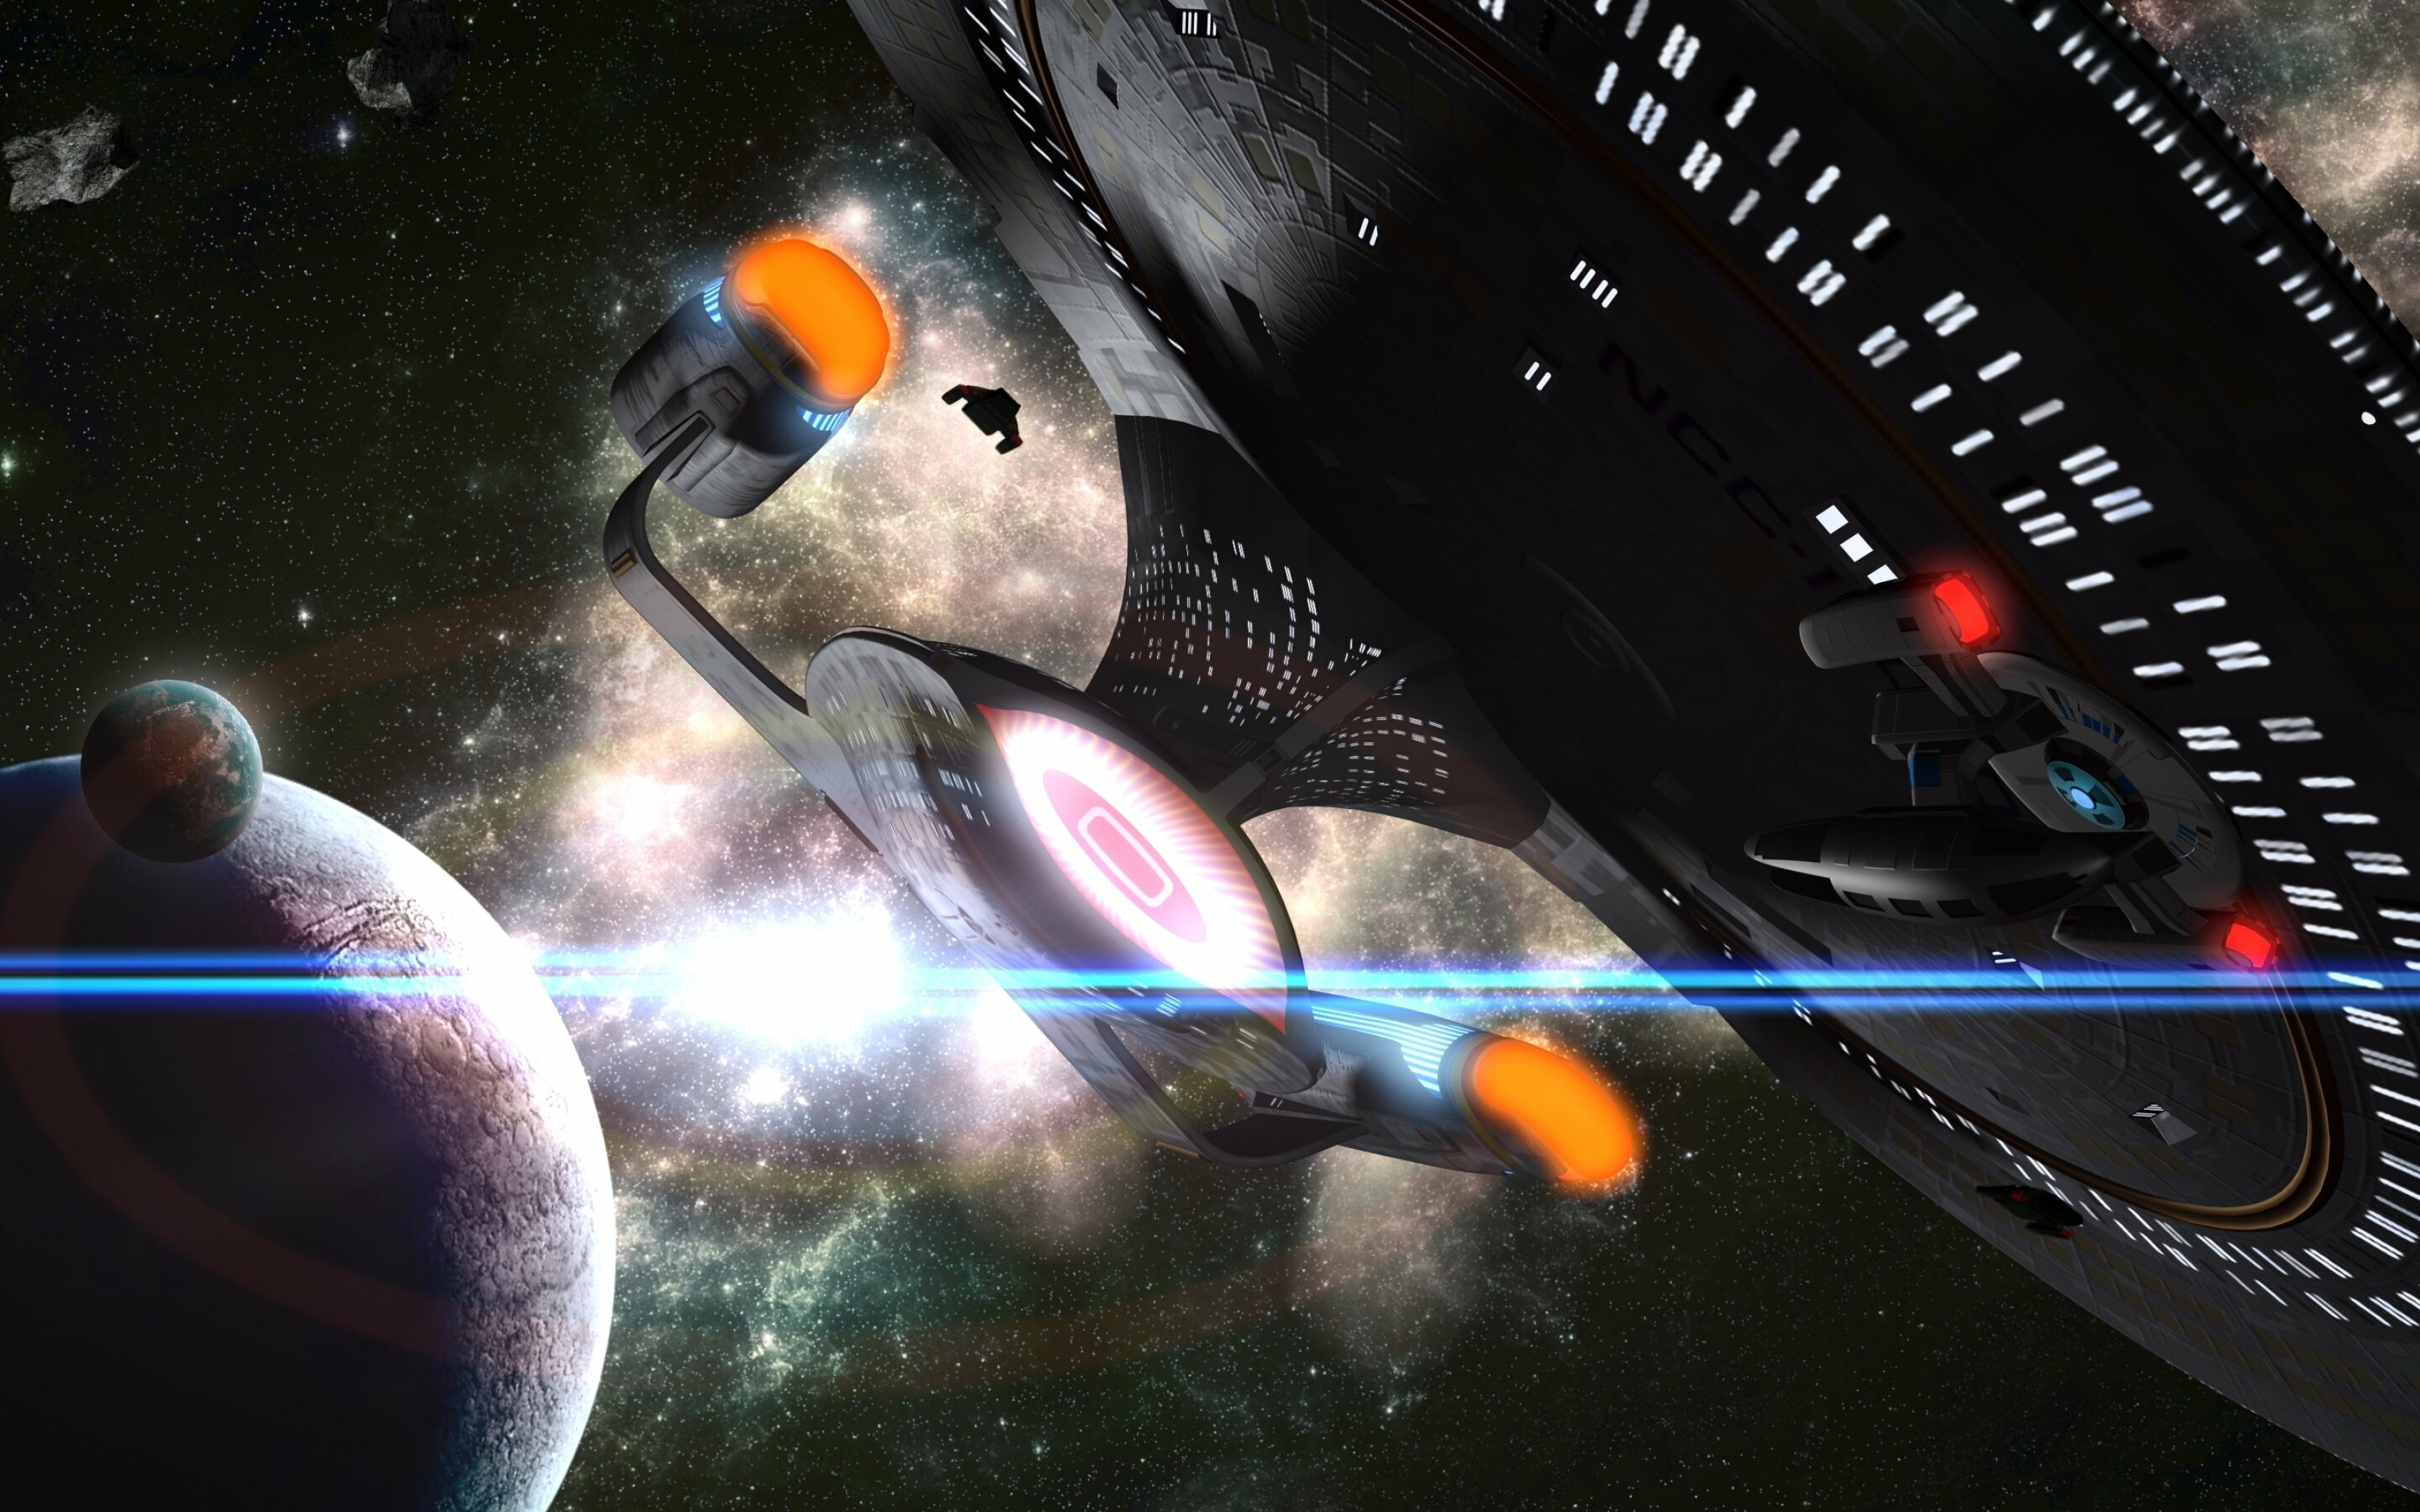 Star Trek: Starship Enterprise, Spaceplane, A space exploration vessel. 3200x2000 HD Wallpaper.